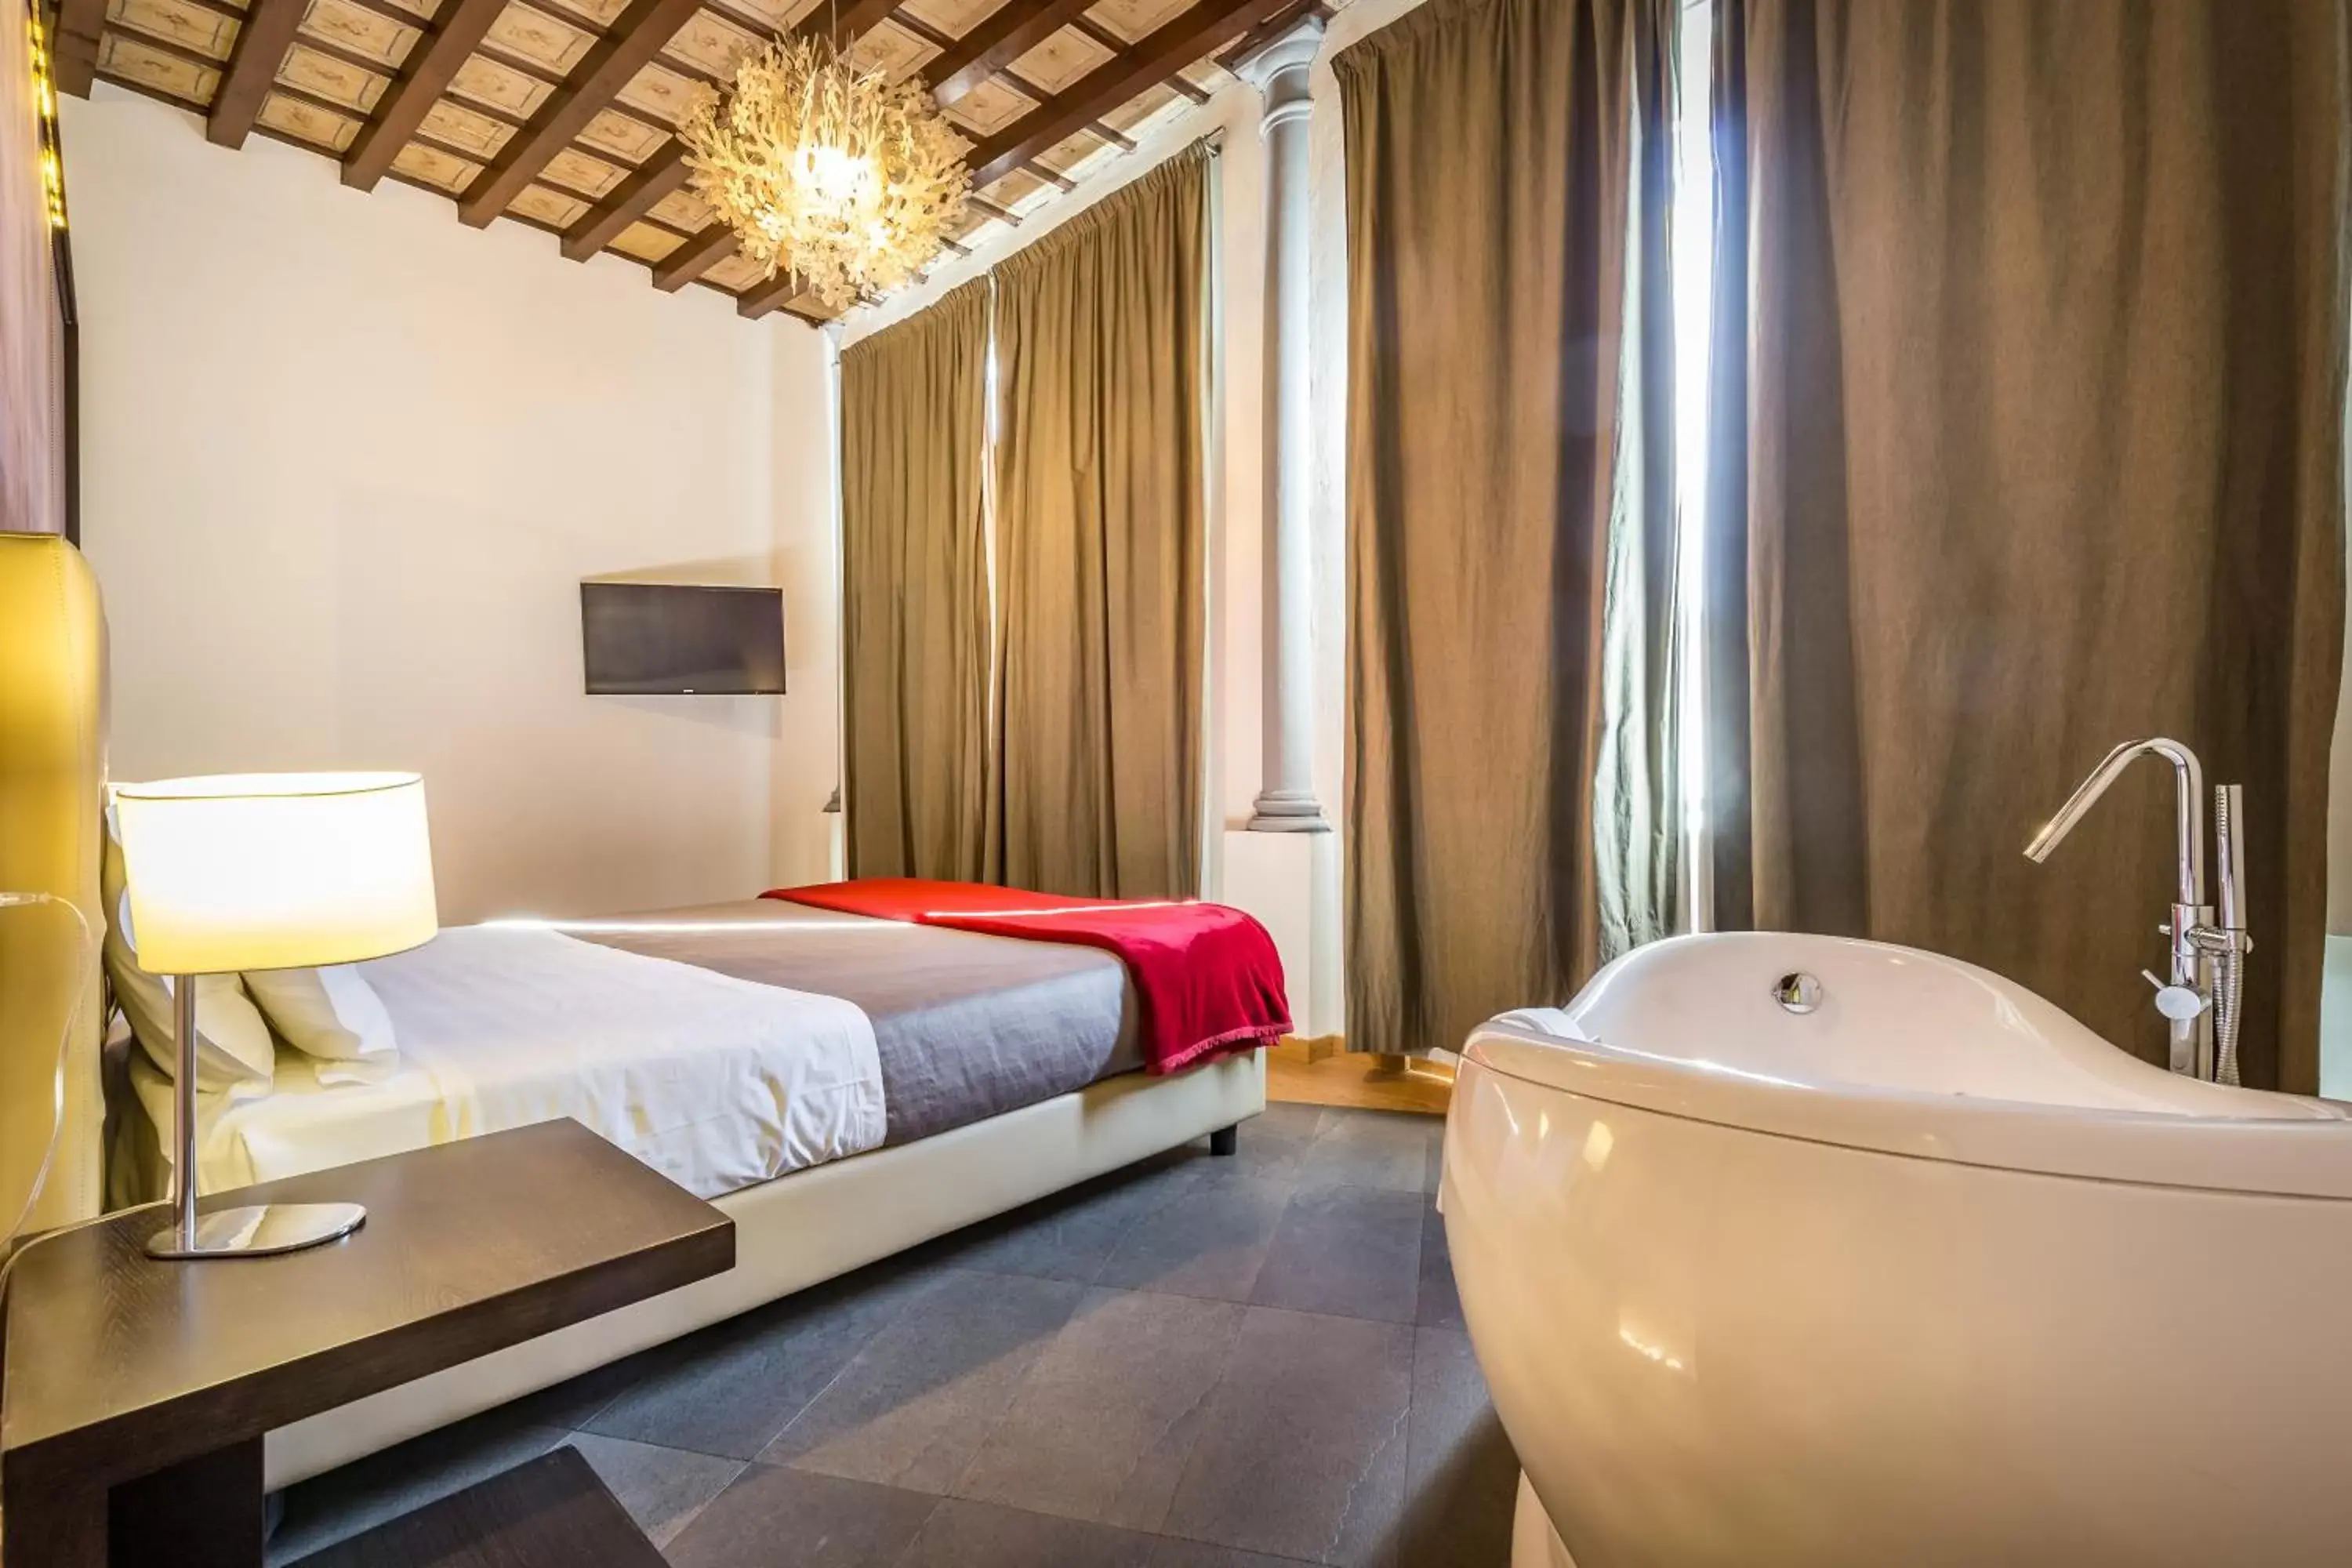 Bedroom, Bathroom in Hotel La Scaletta al Ponte Vecchio